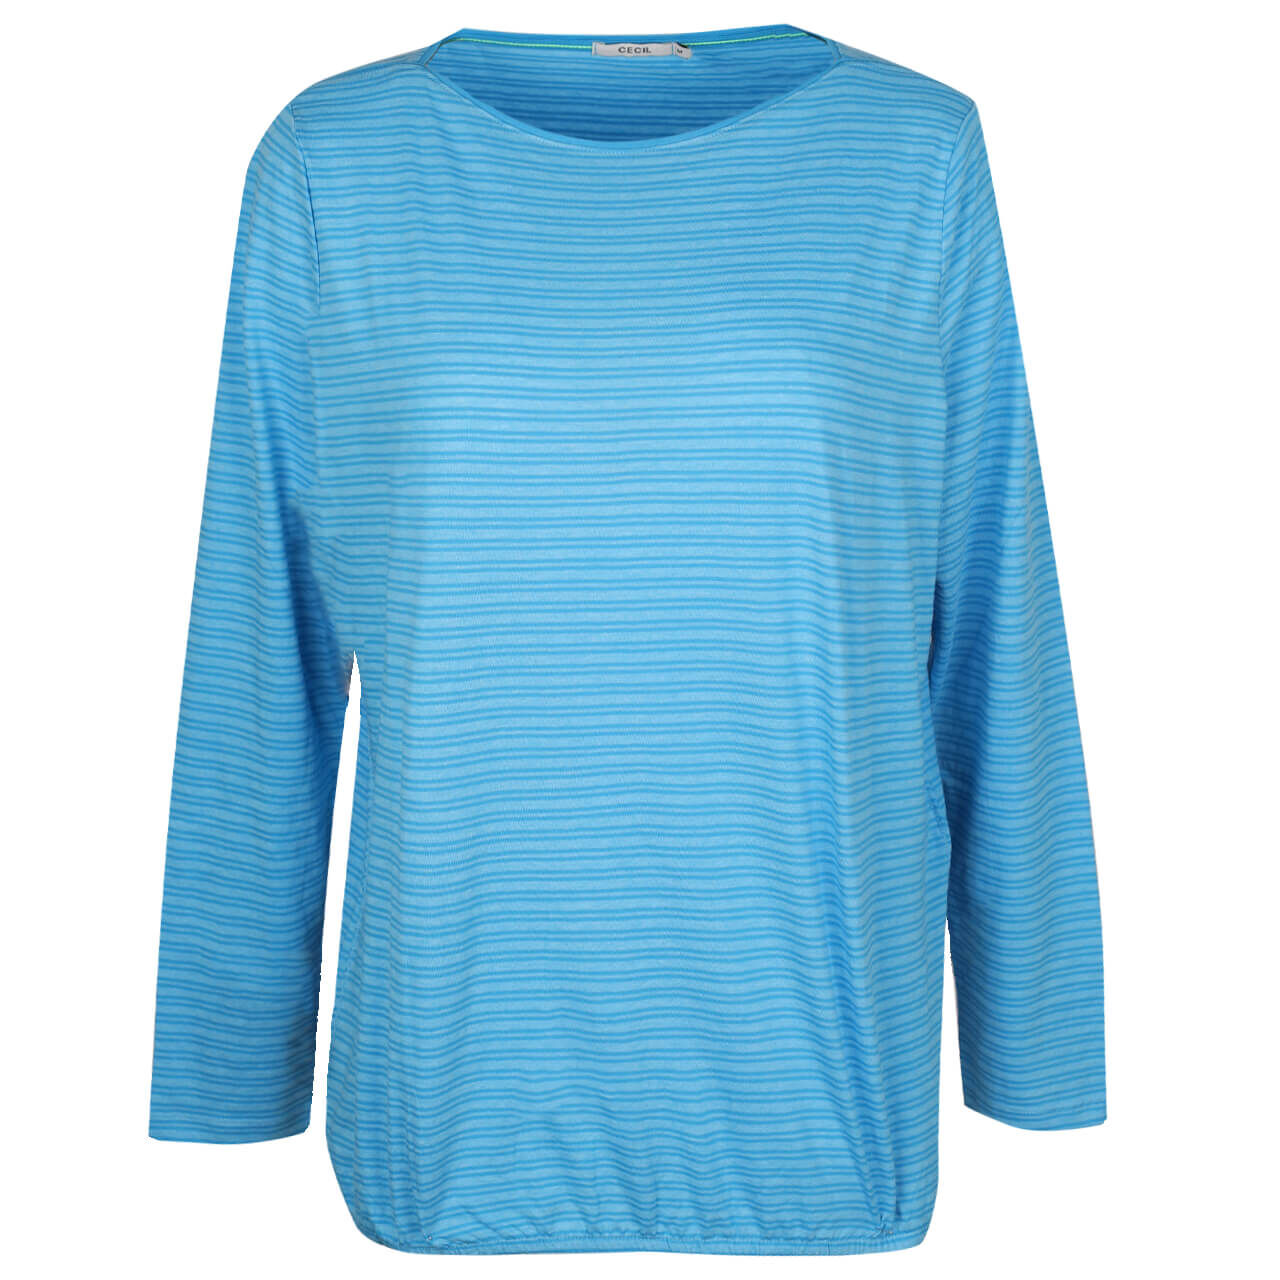 Cecil Overdye Double Stripe Langarm Shirt club blue melange